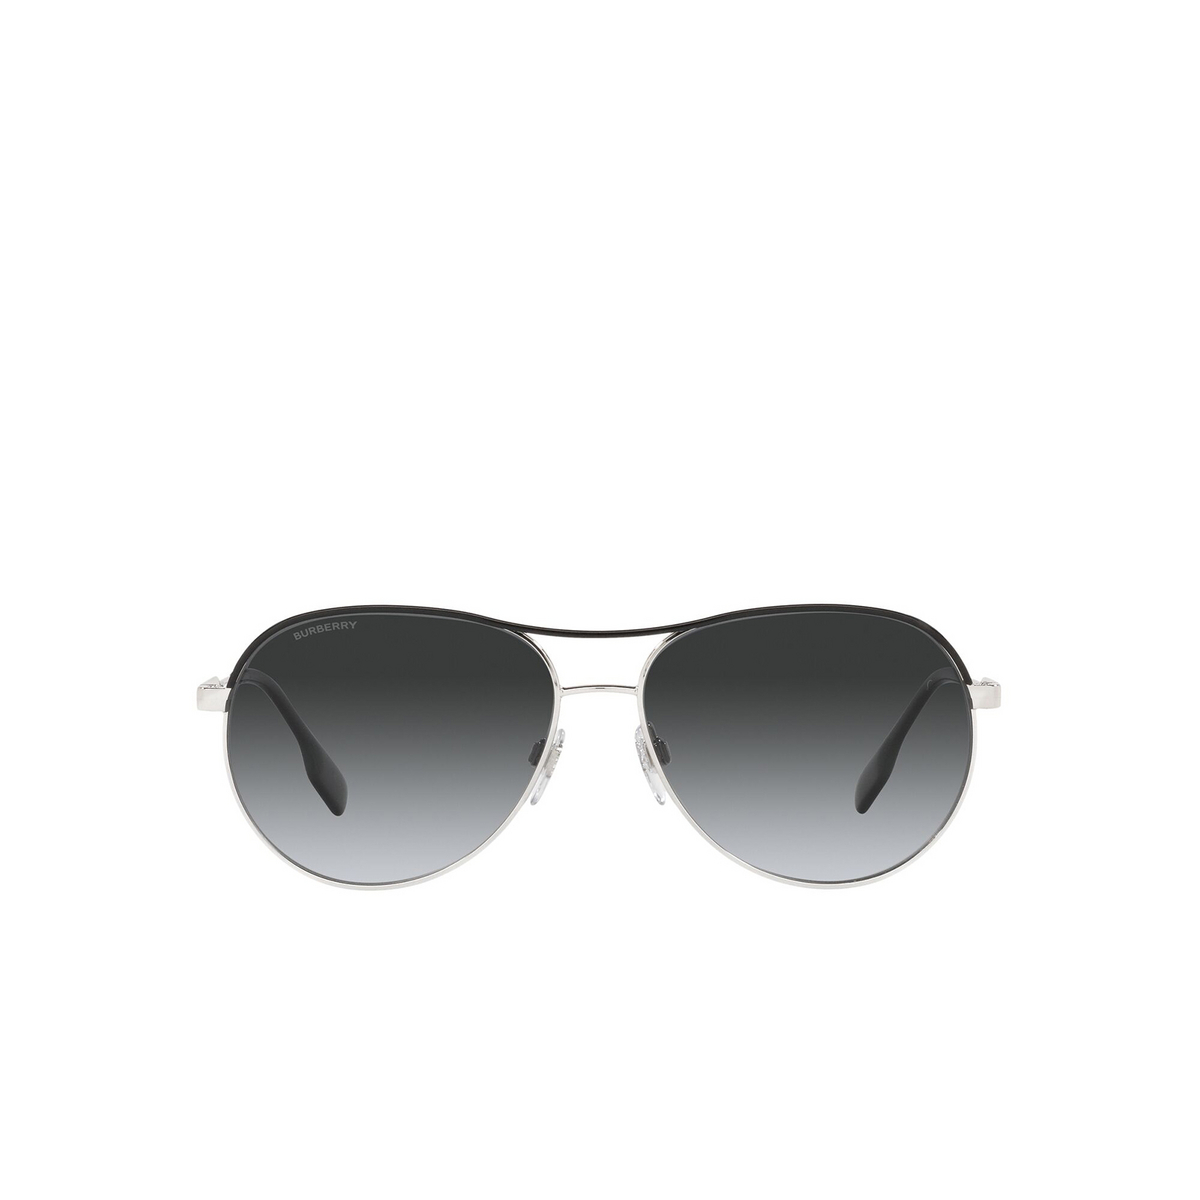 Burberry TARA Sunglasses 1005T3 Silver / Black - front view